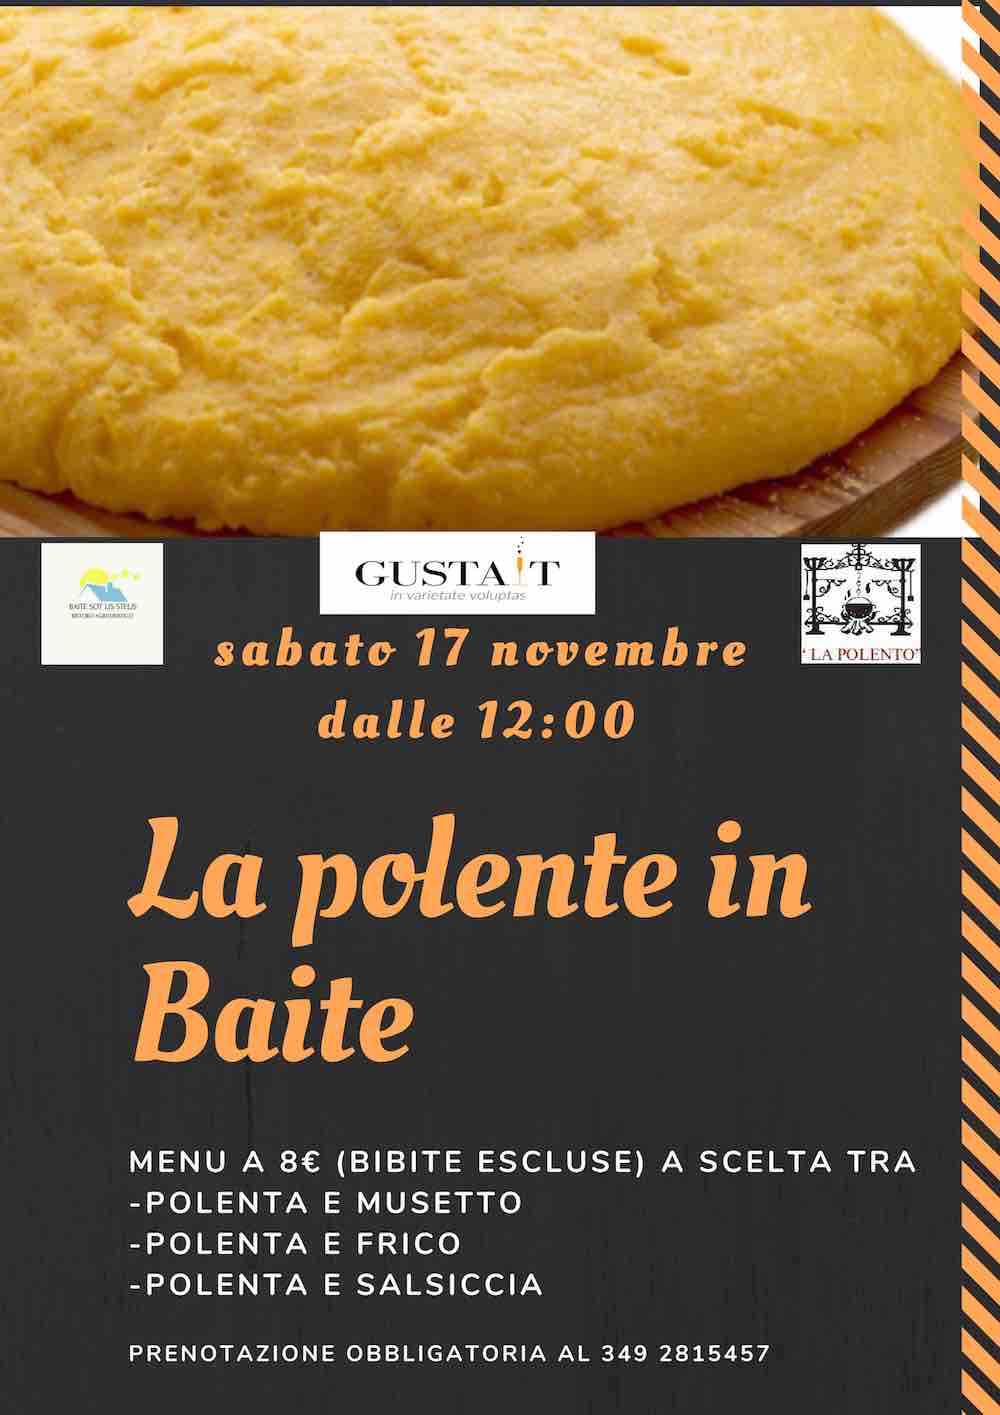 Baite sot lis stelis presenta l’evento “La polente in Baite”